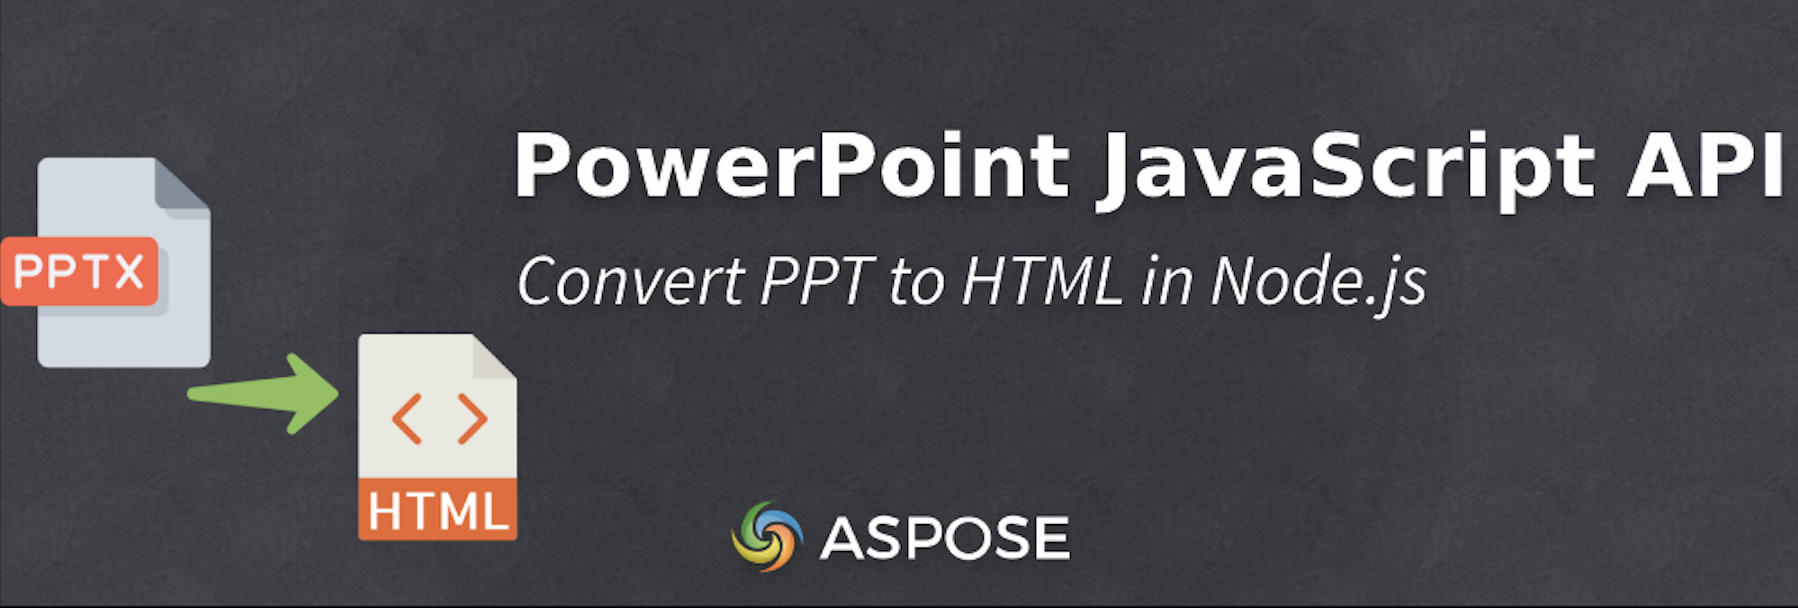 Converter PPT em HTML em Node.js - API JavaScript do PowerPoint